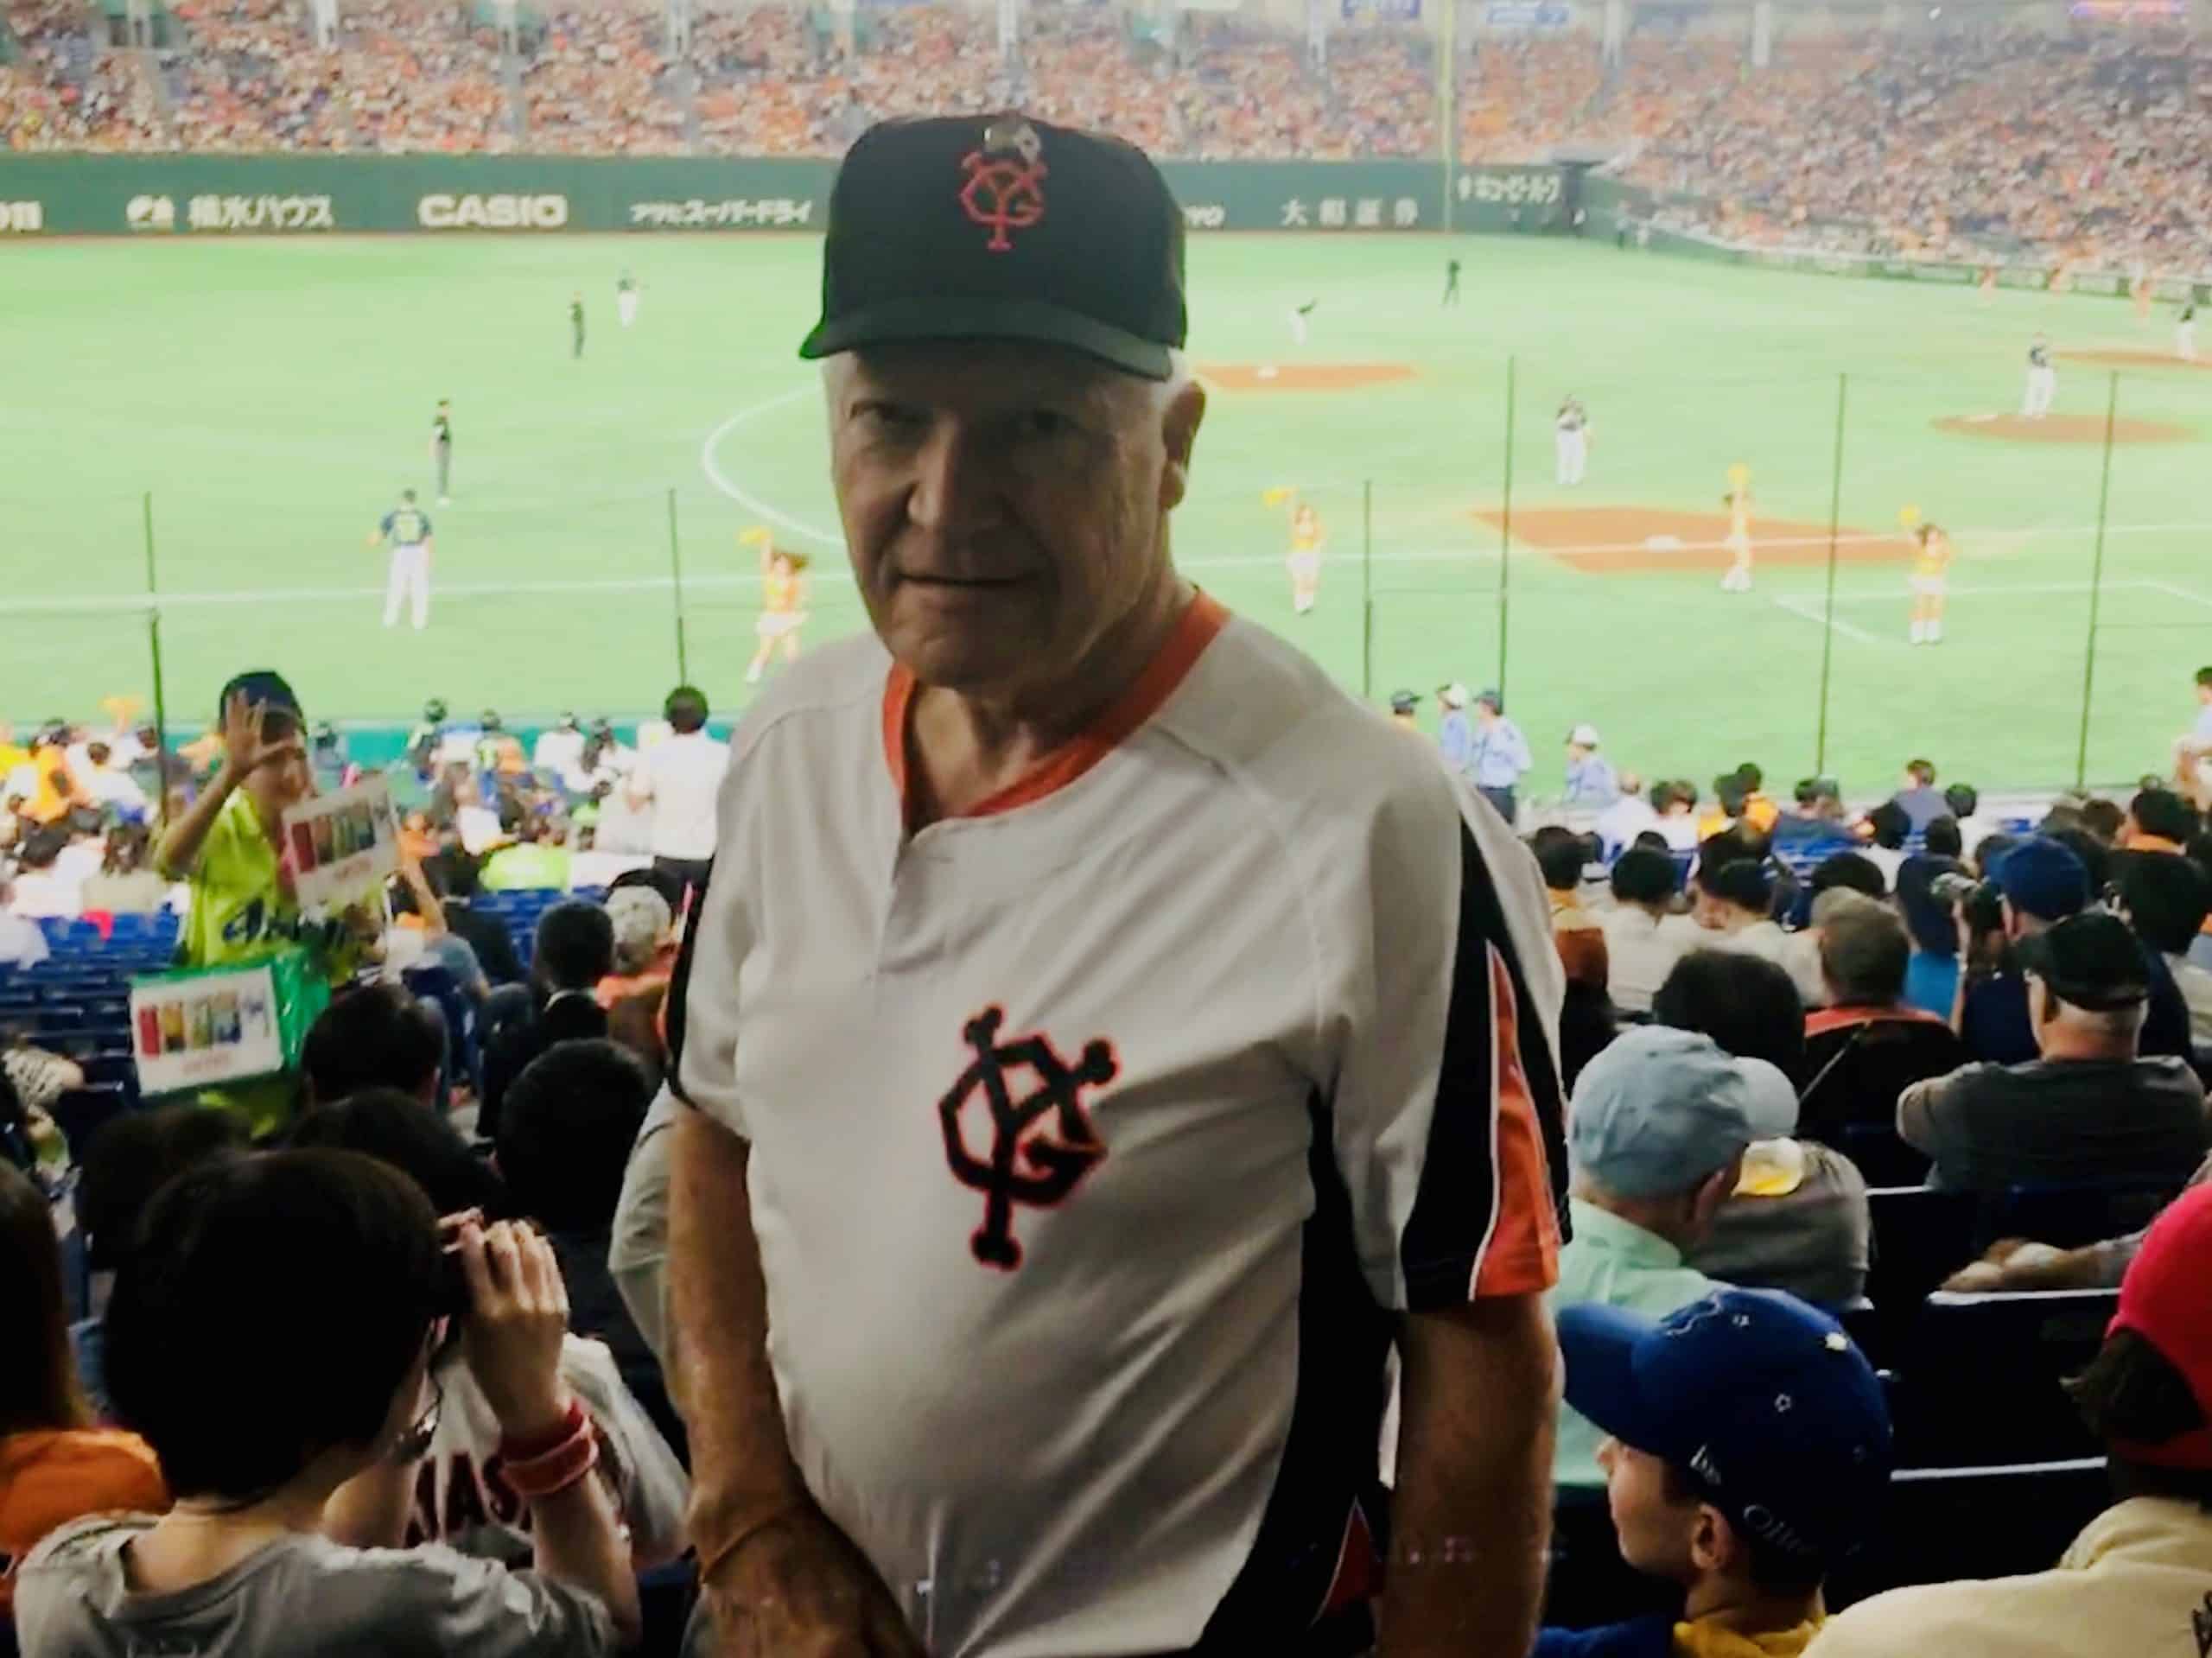 Ichiro Suzuki New York Yankees MLB Fan Apparel & Souvenirs for